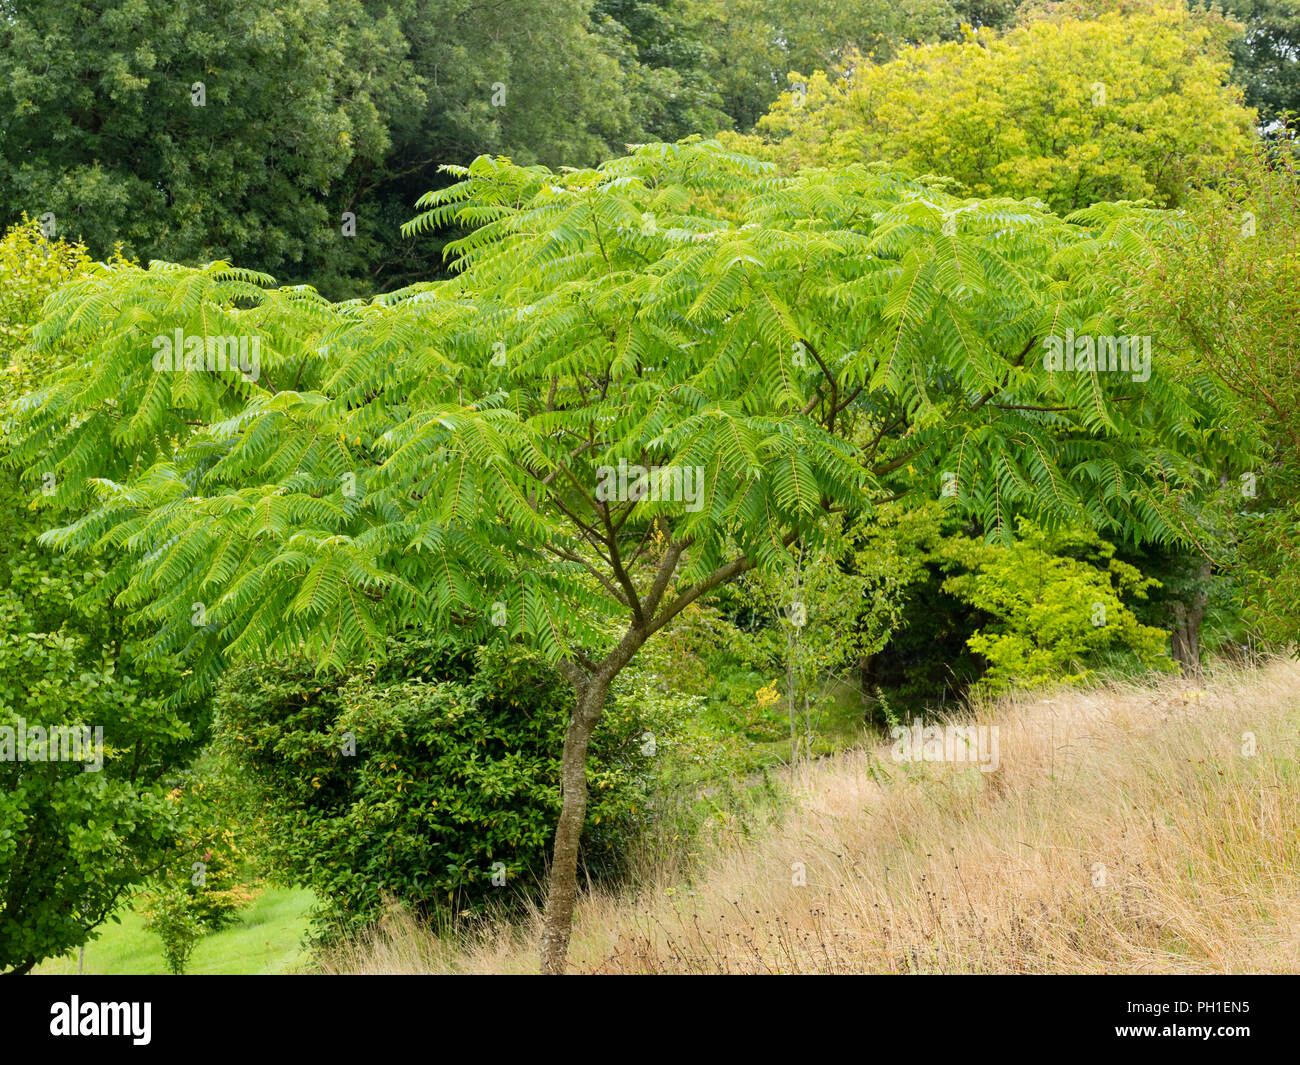 Pinnate foliage and spreading habit of the half hardy prickly ash tree, Zanthoxylum ailanthoides Stock Photo